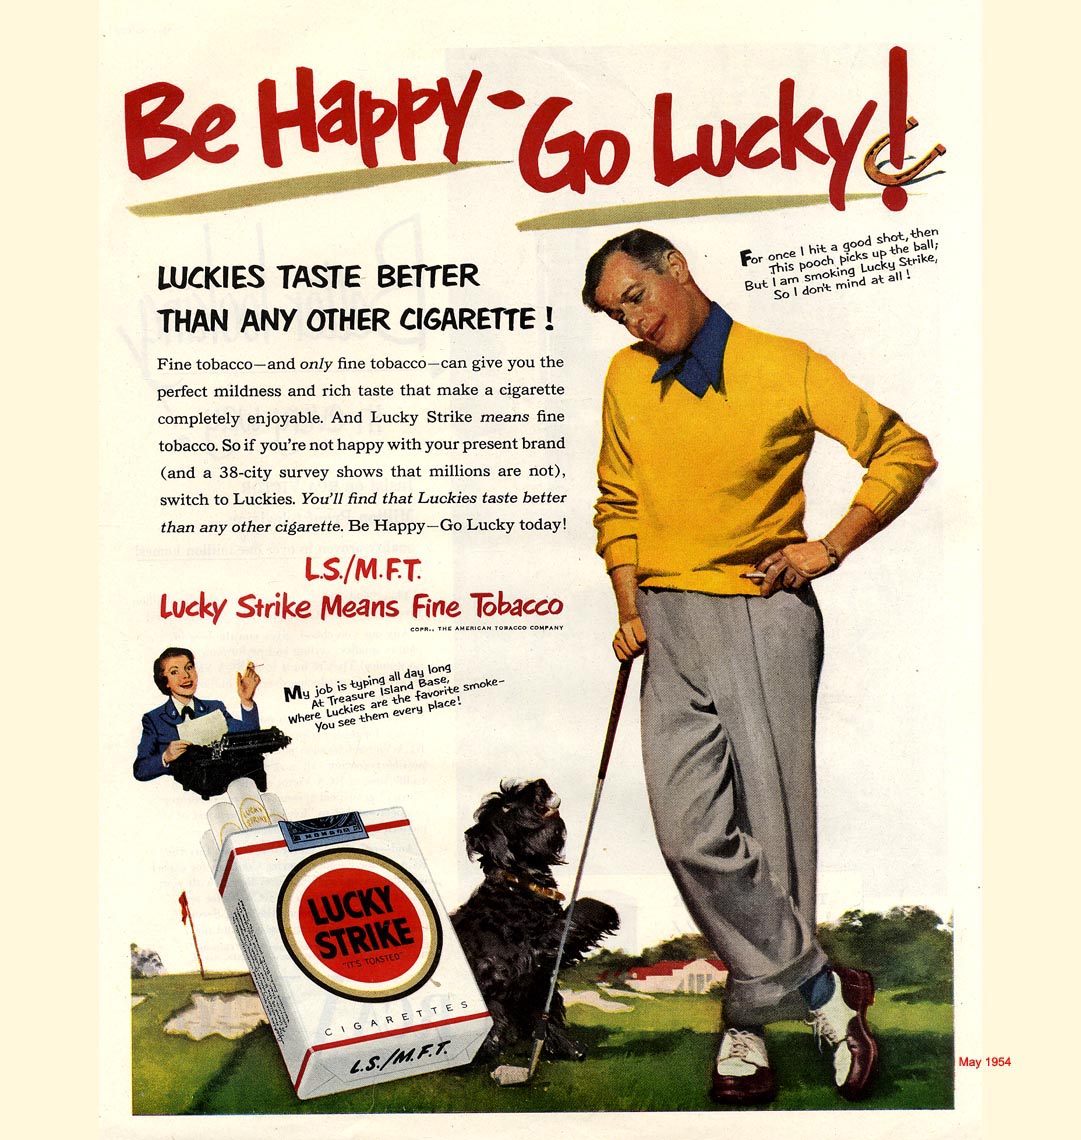 Only fine. Лаки страйк реклама. Реклама сигарет Китч. Be Happy go Lucky. Ww2 Lucky Strike ad.